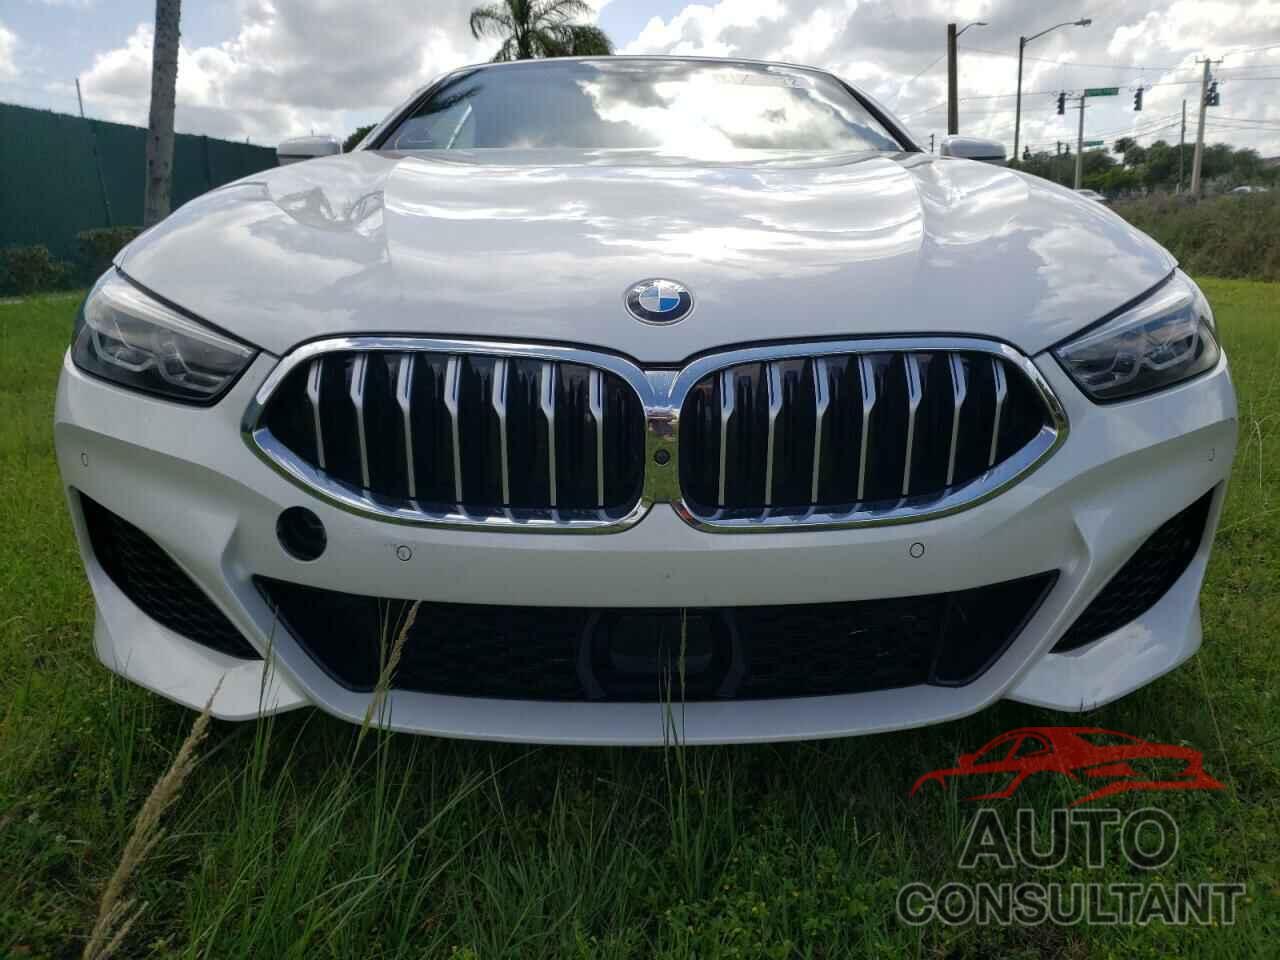 BMW 8 SERIES 2020 - WBADZ2C01LCE05169